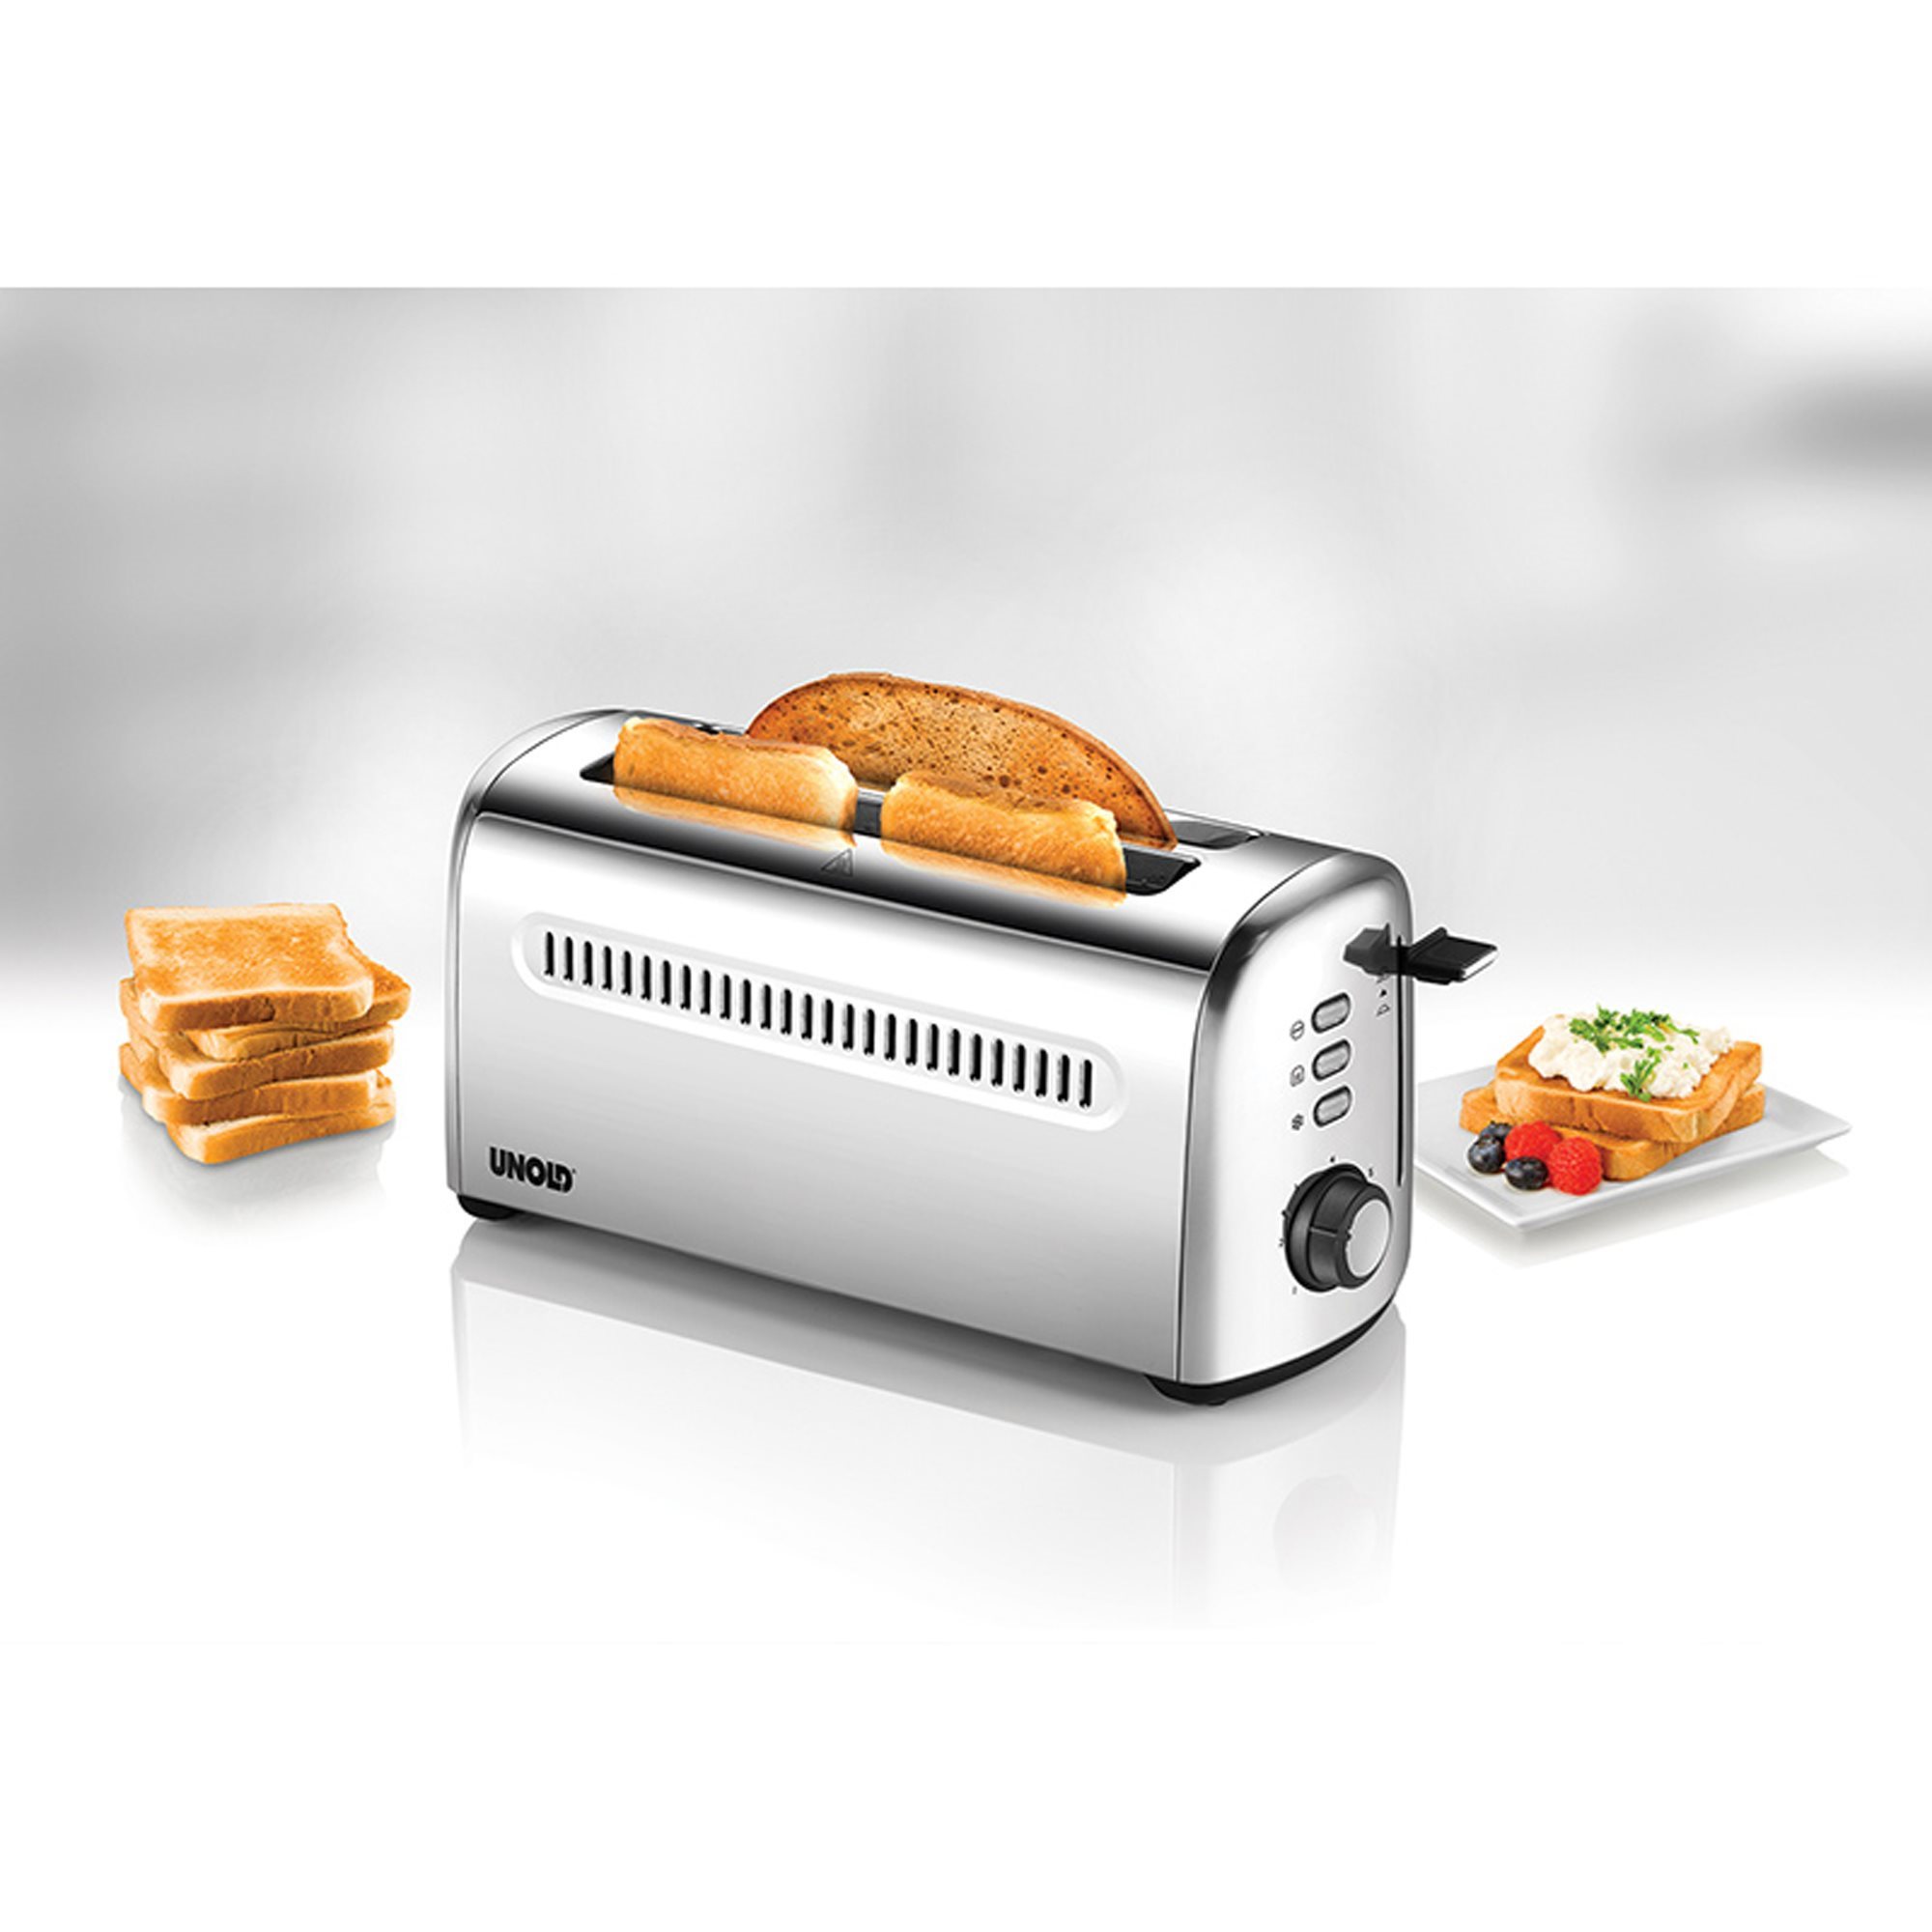 Toaster 2 sloturi lungi Retro, 1500 W - Unold